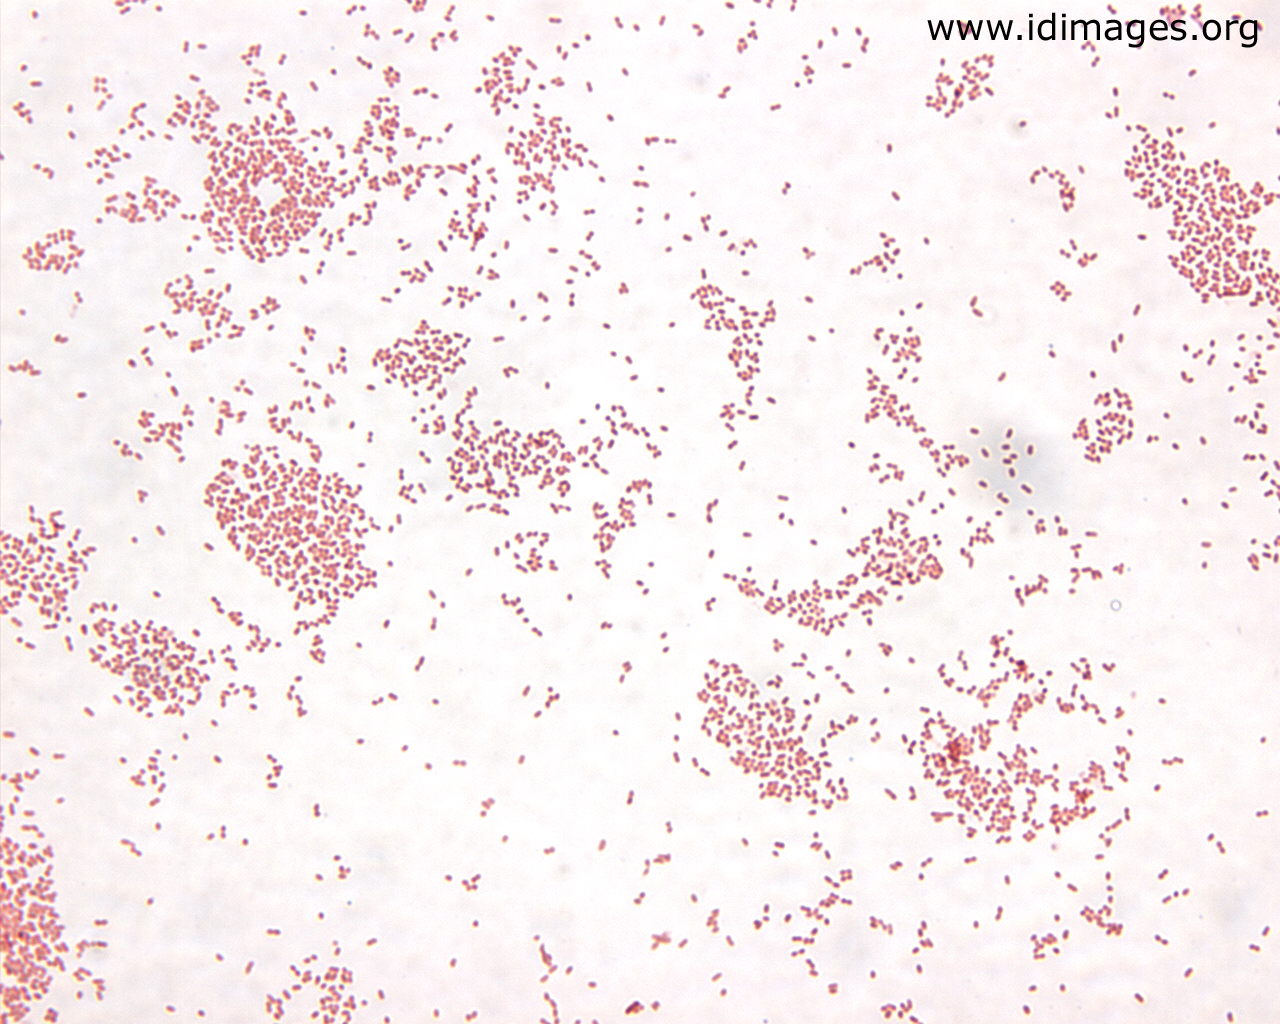 Gram stain of Bordetella pertussis (source)